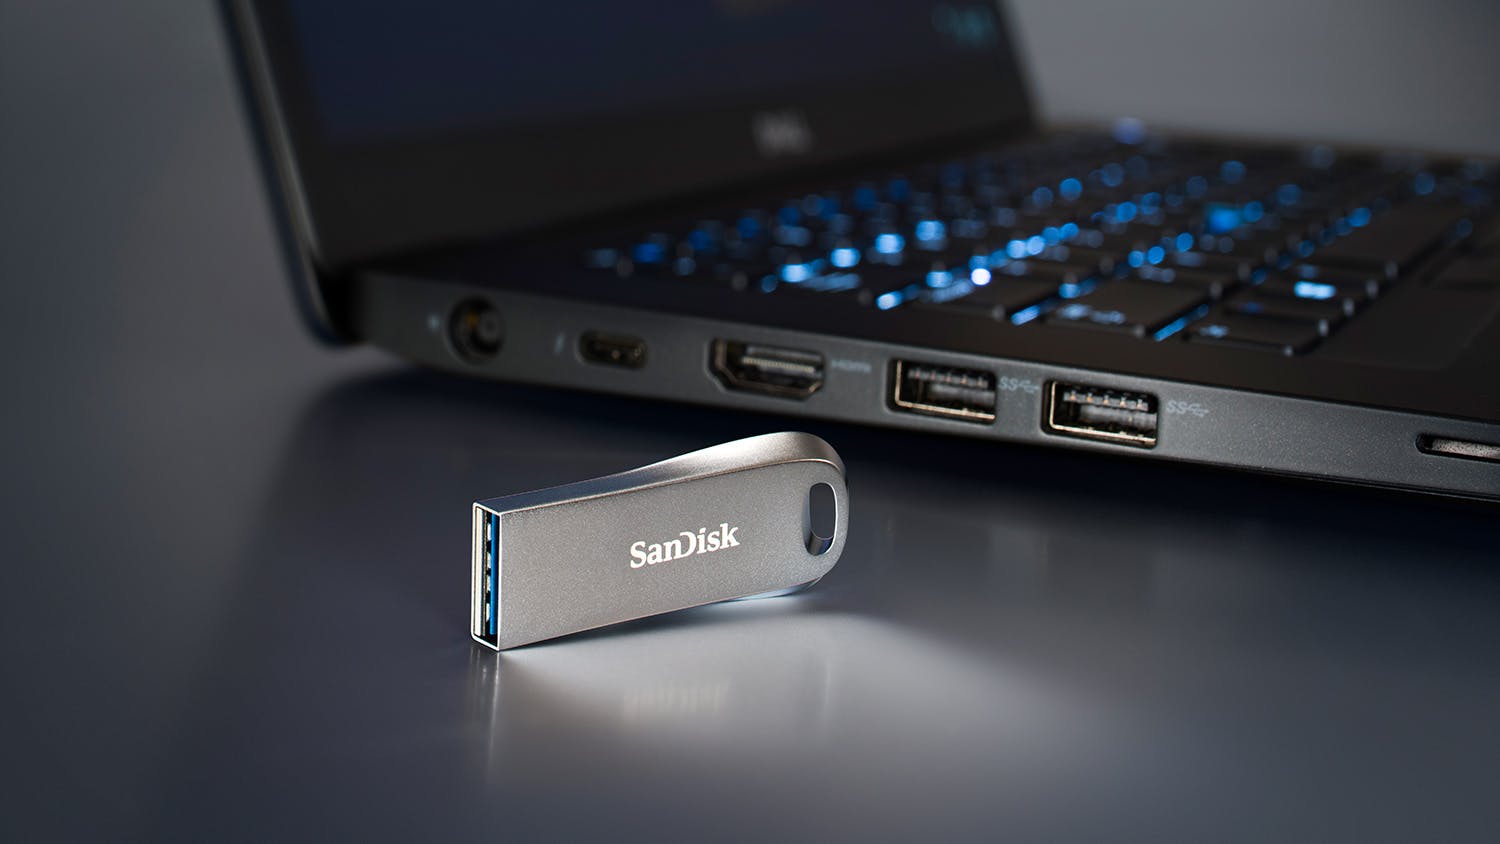 SanDisk Ultra Luxe USB 3.1 Flash Drive - 256GB (Metal)